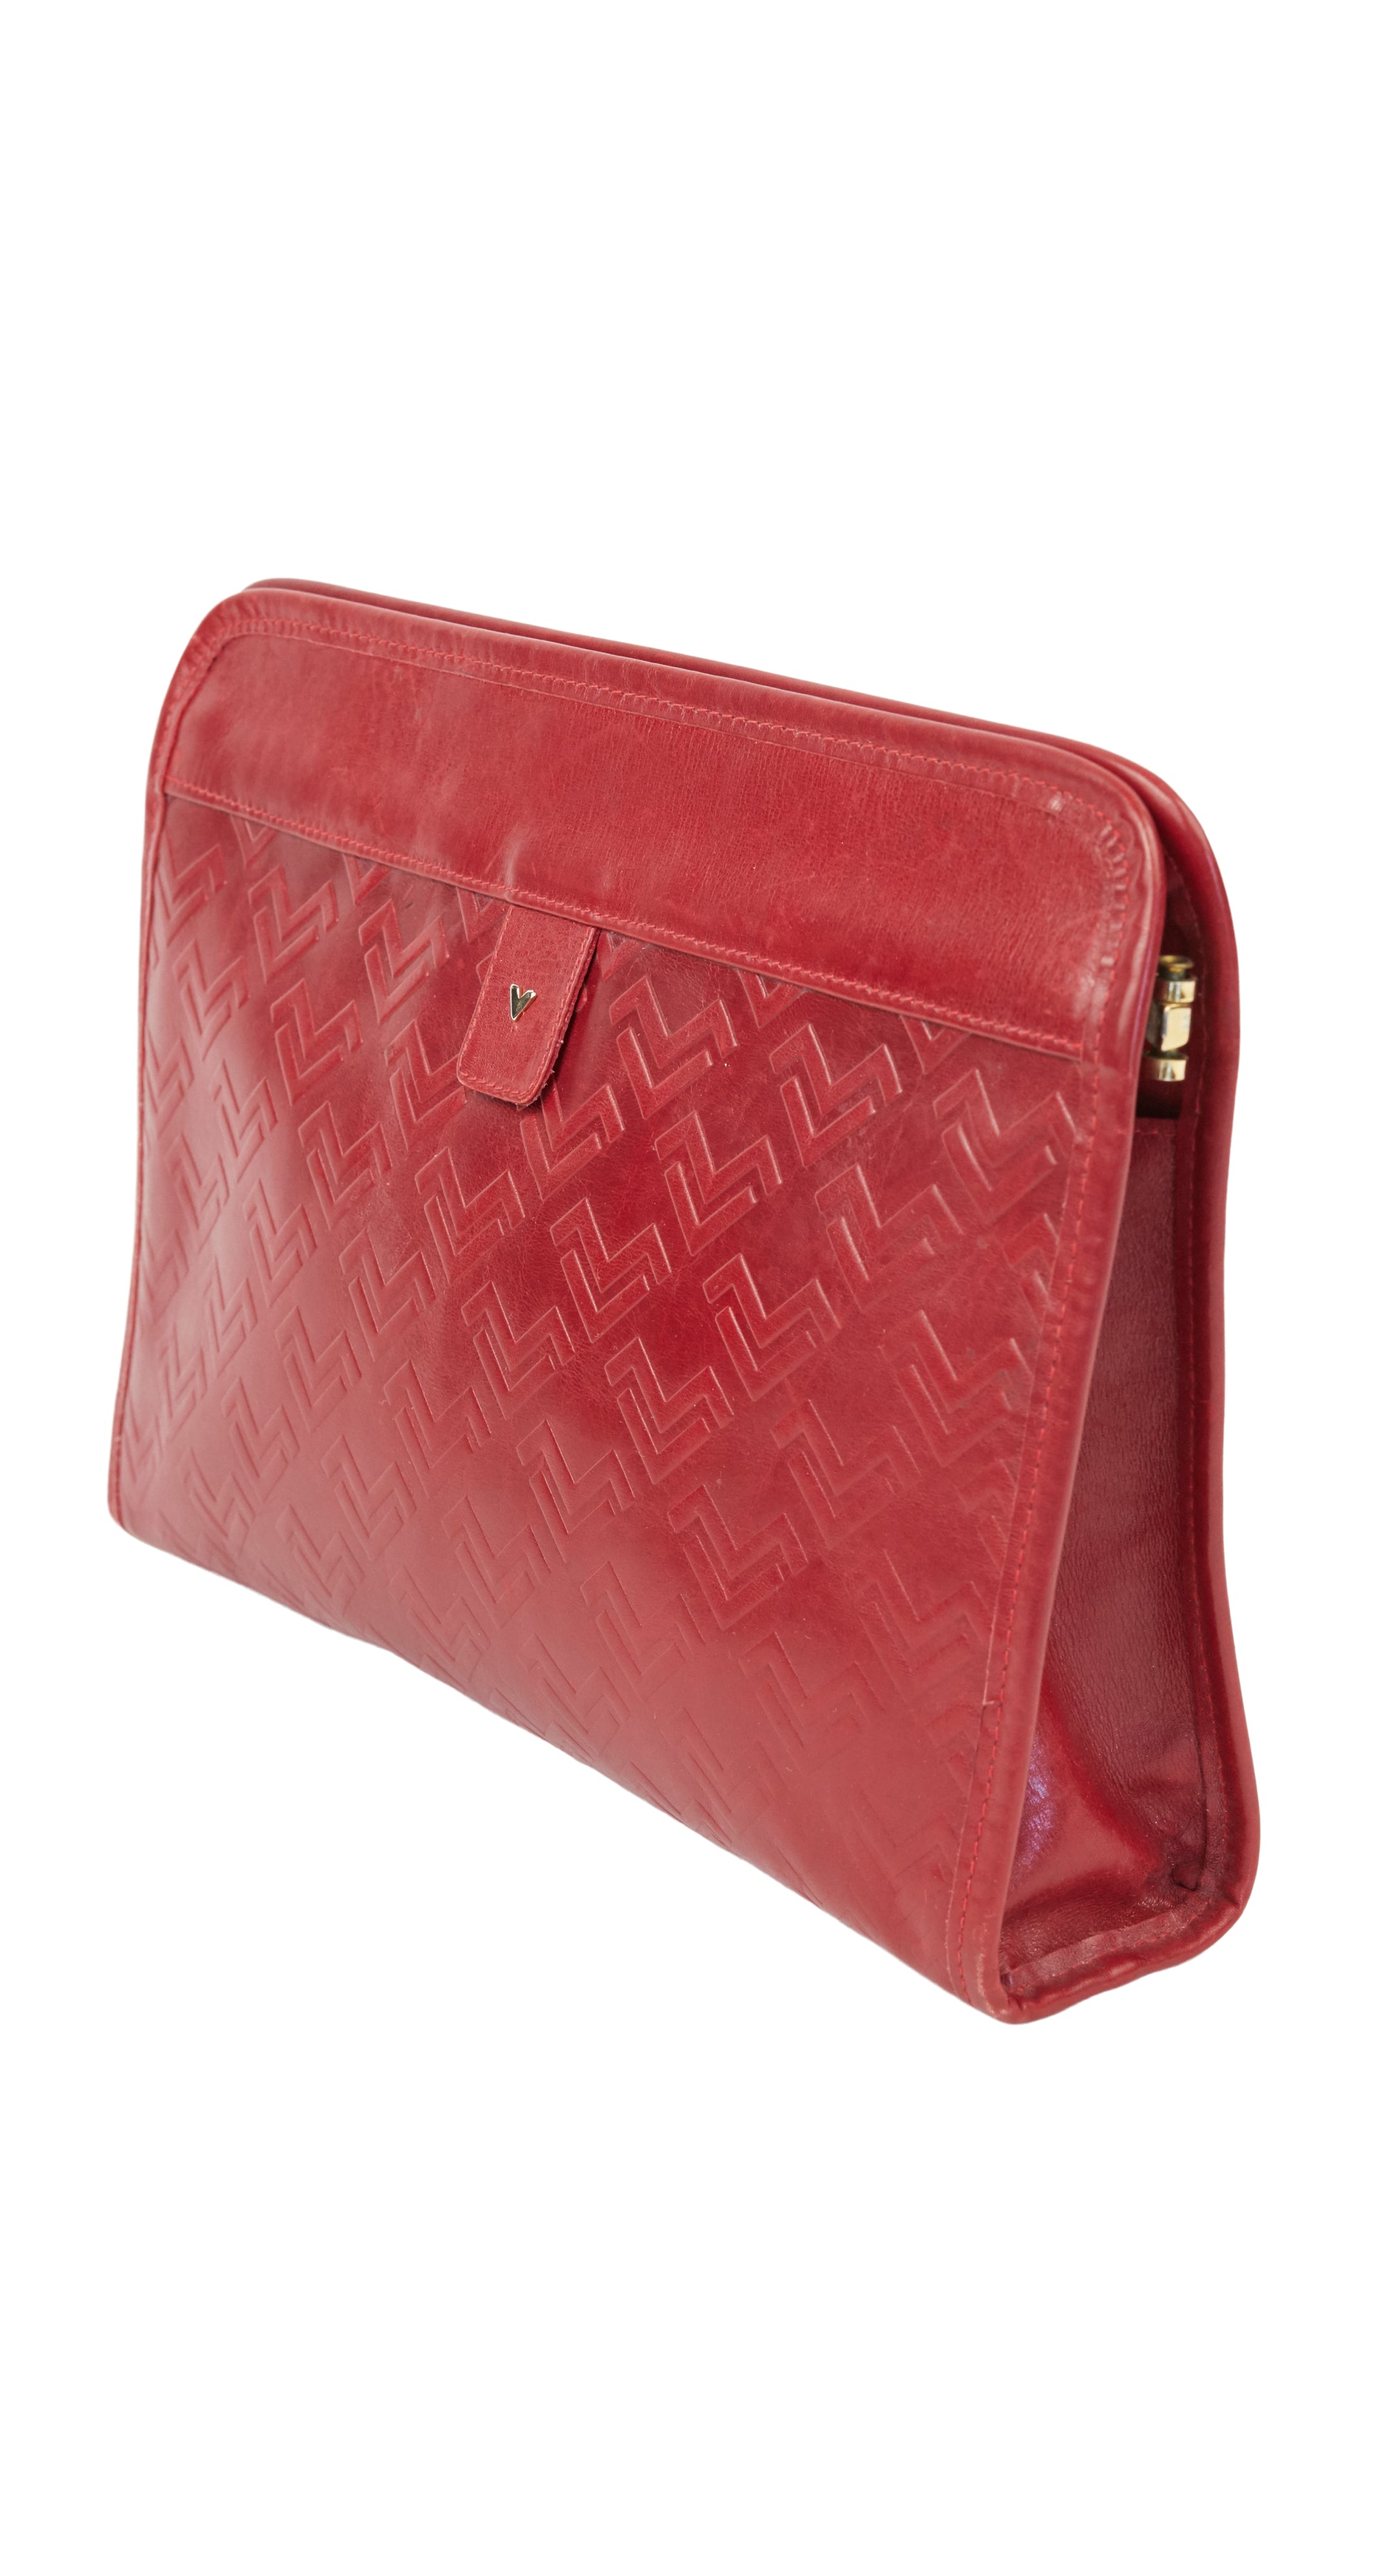 Mario Valentino 1970s Vintage Monogram Red Leather Clutch Bag